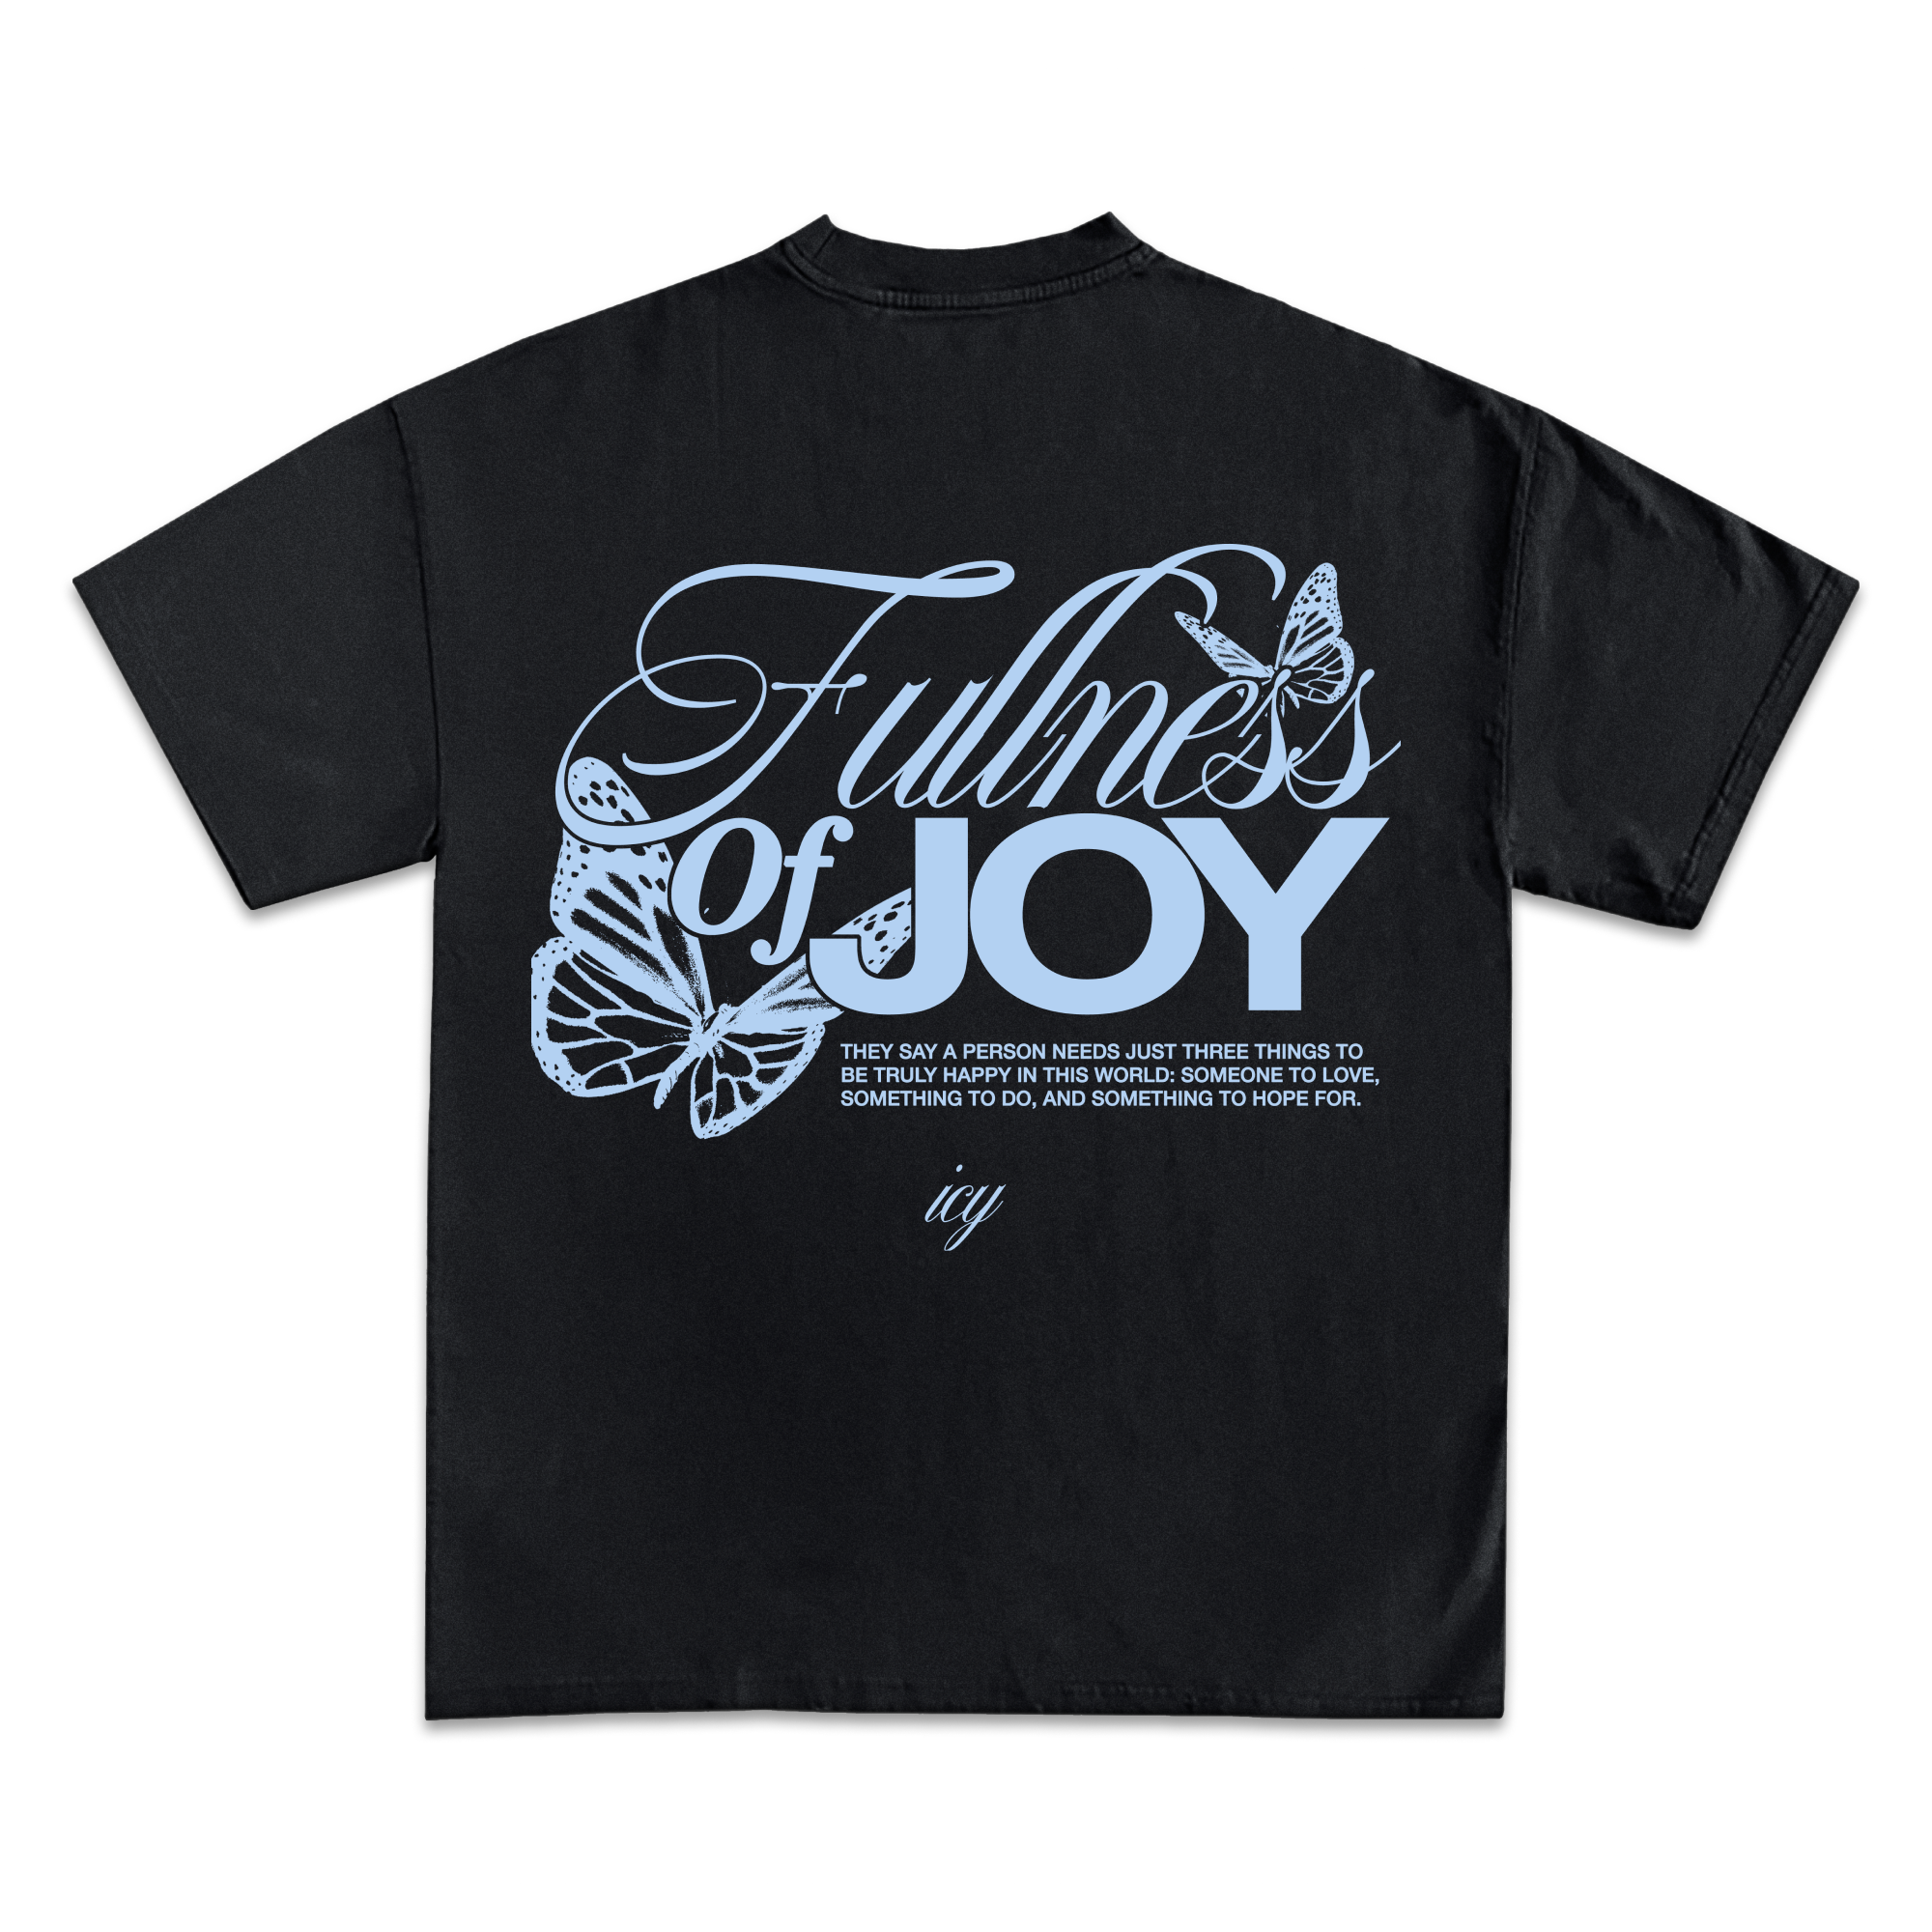 Icy Fullness of Joy T-Shirt